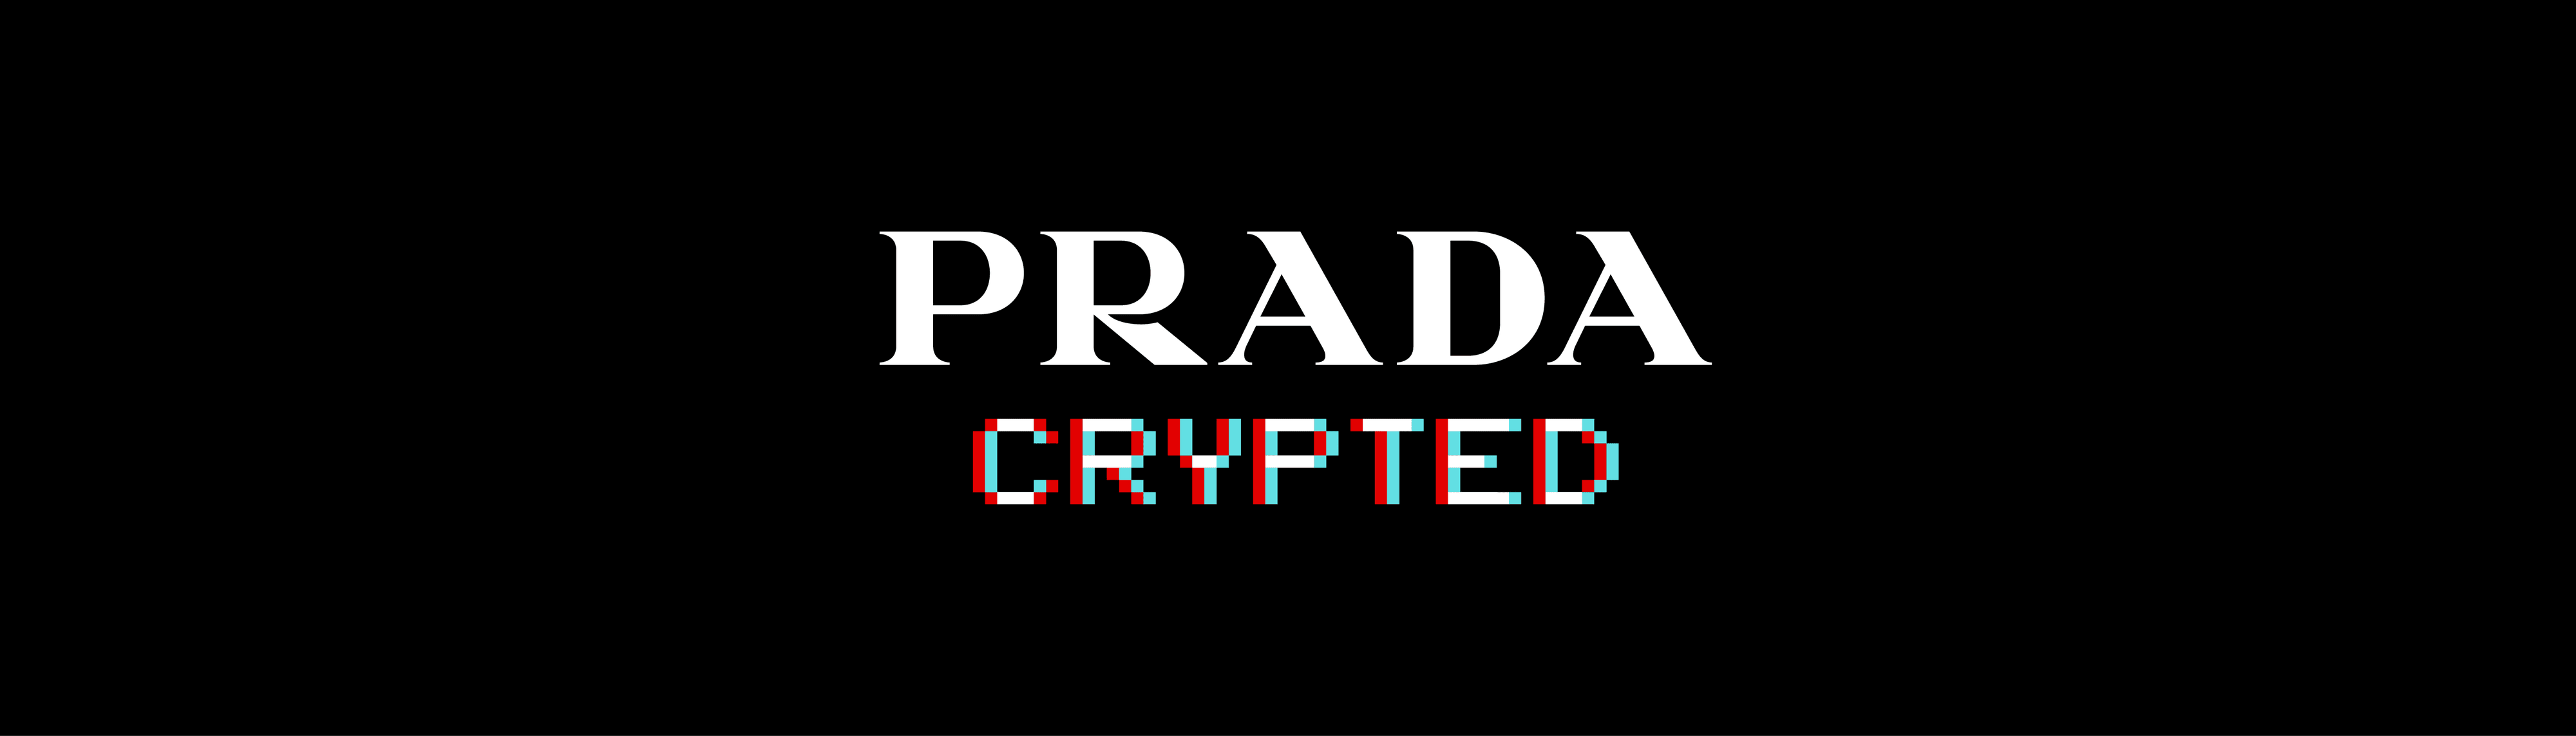 Prada-Crypted banner